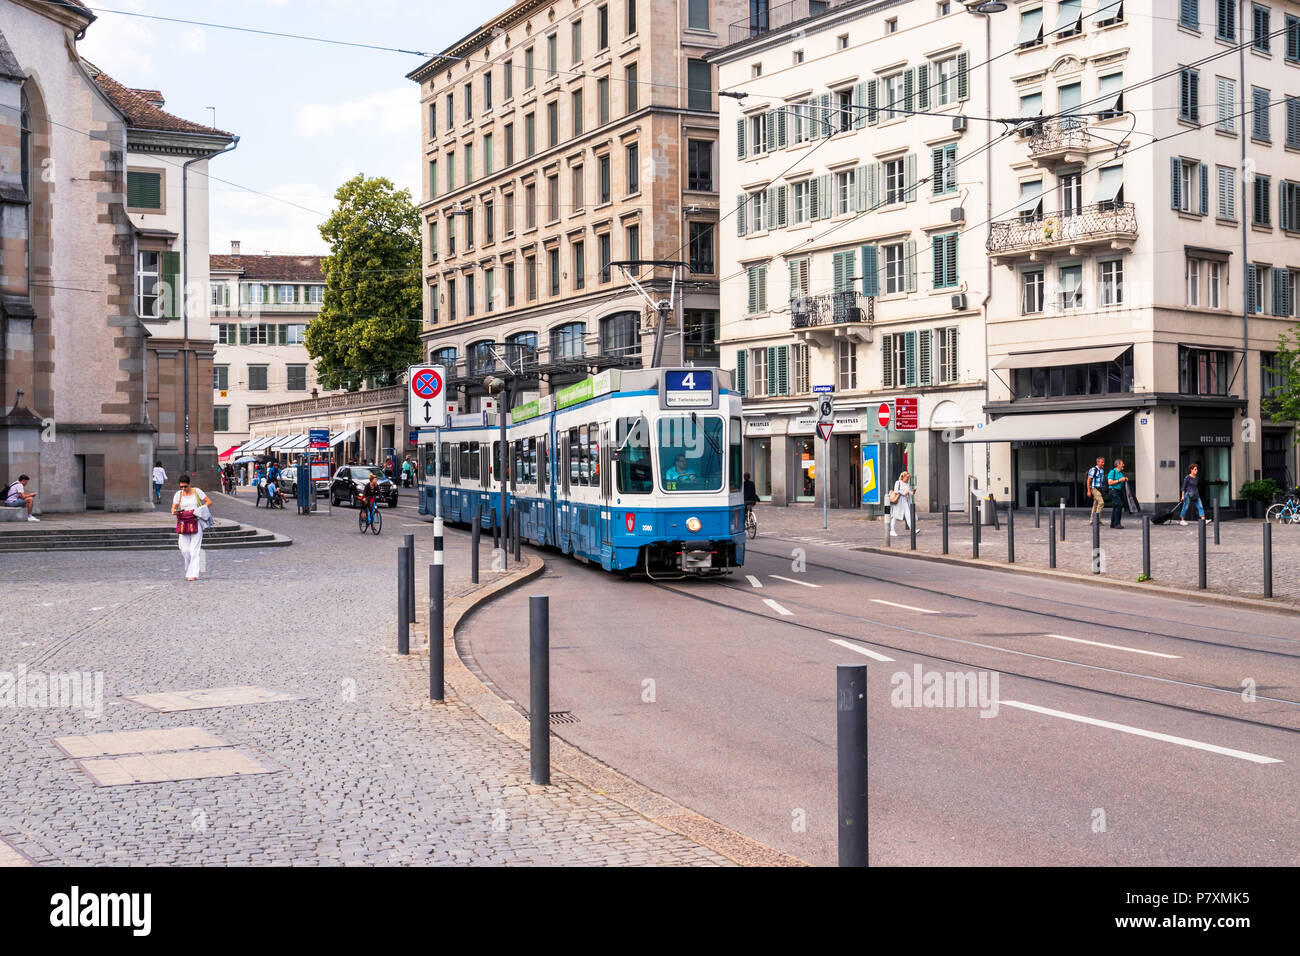 A tram in Zurich Stock Photo